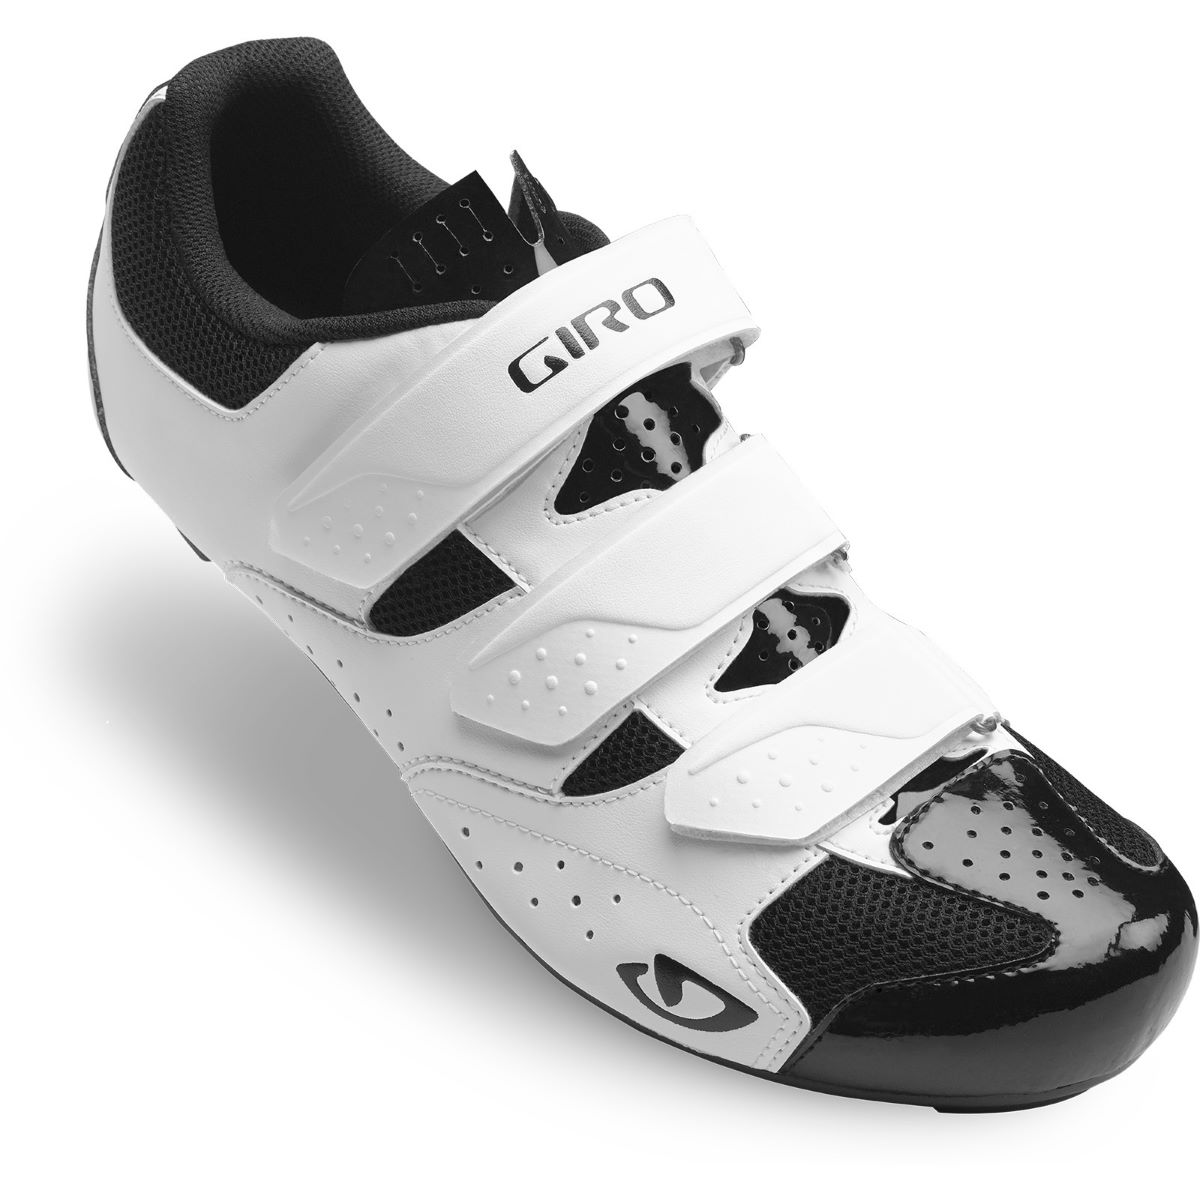 Zapatillas de carretera Giro Techne - Zapatillas de ciclismo